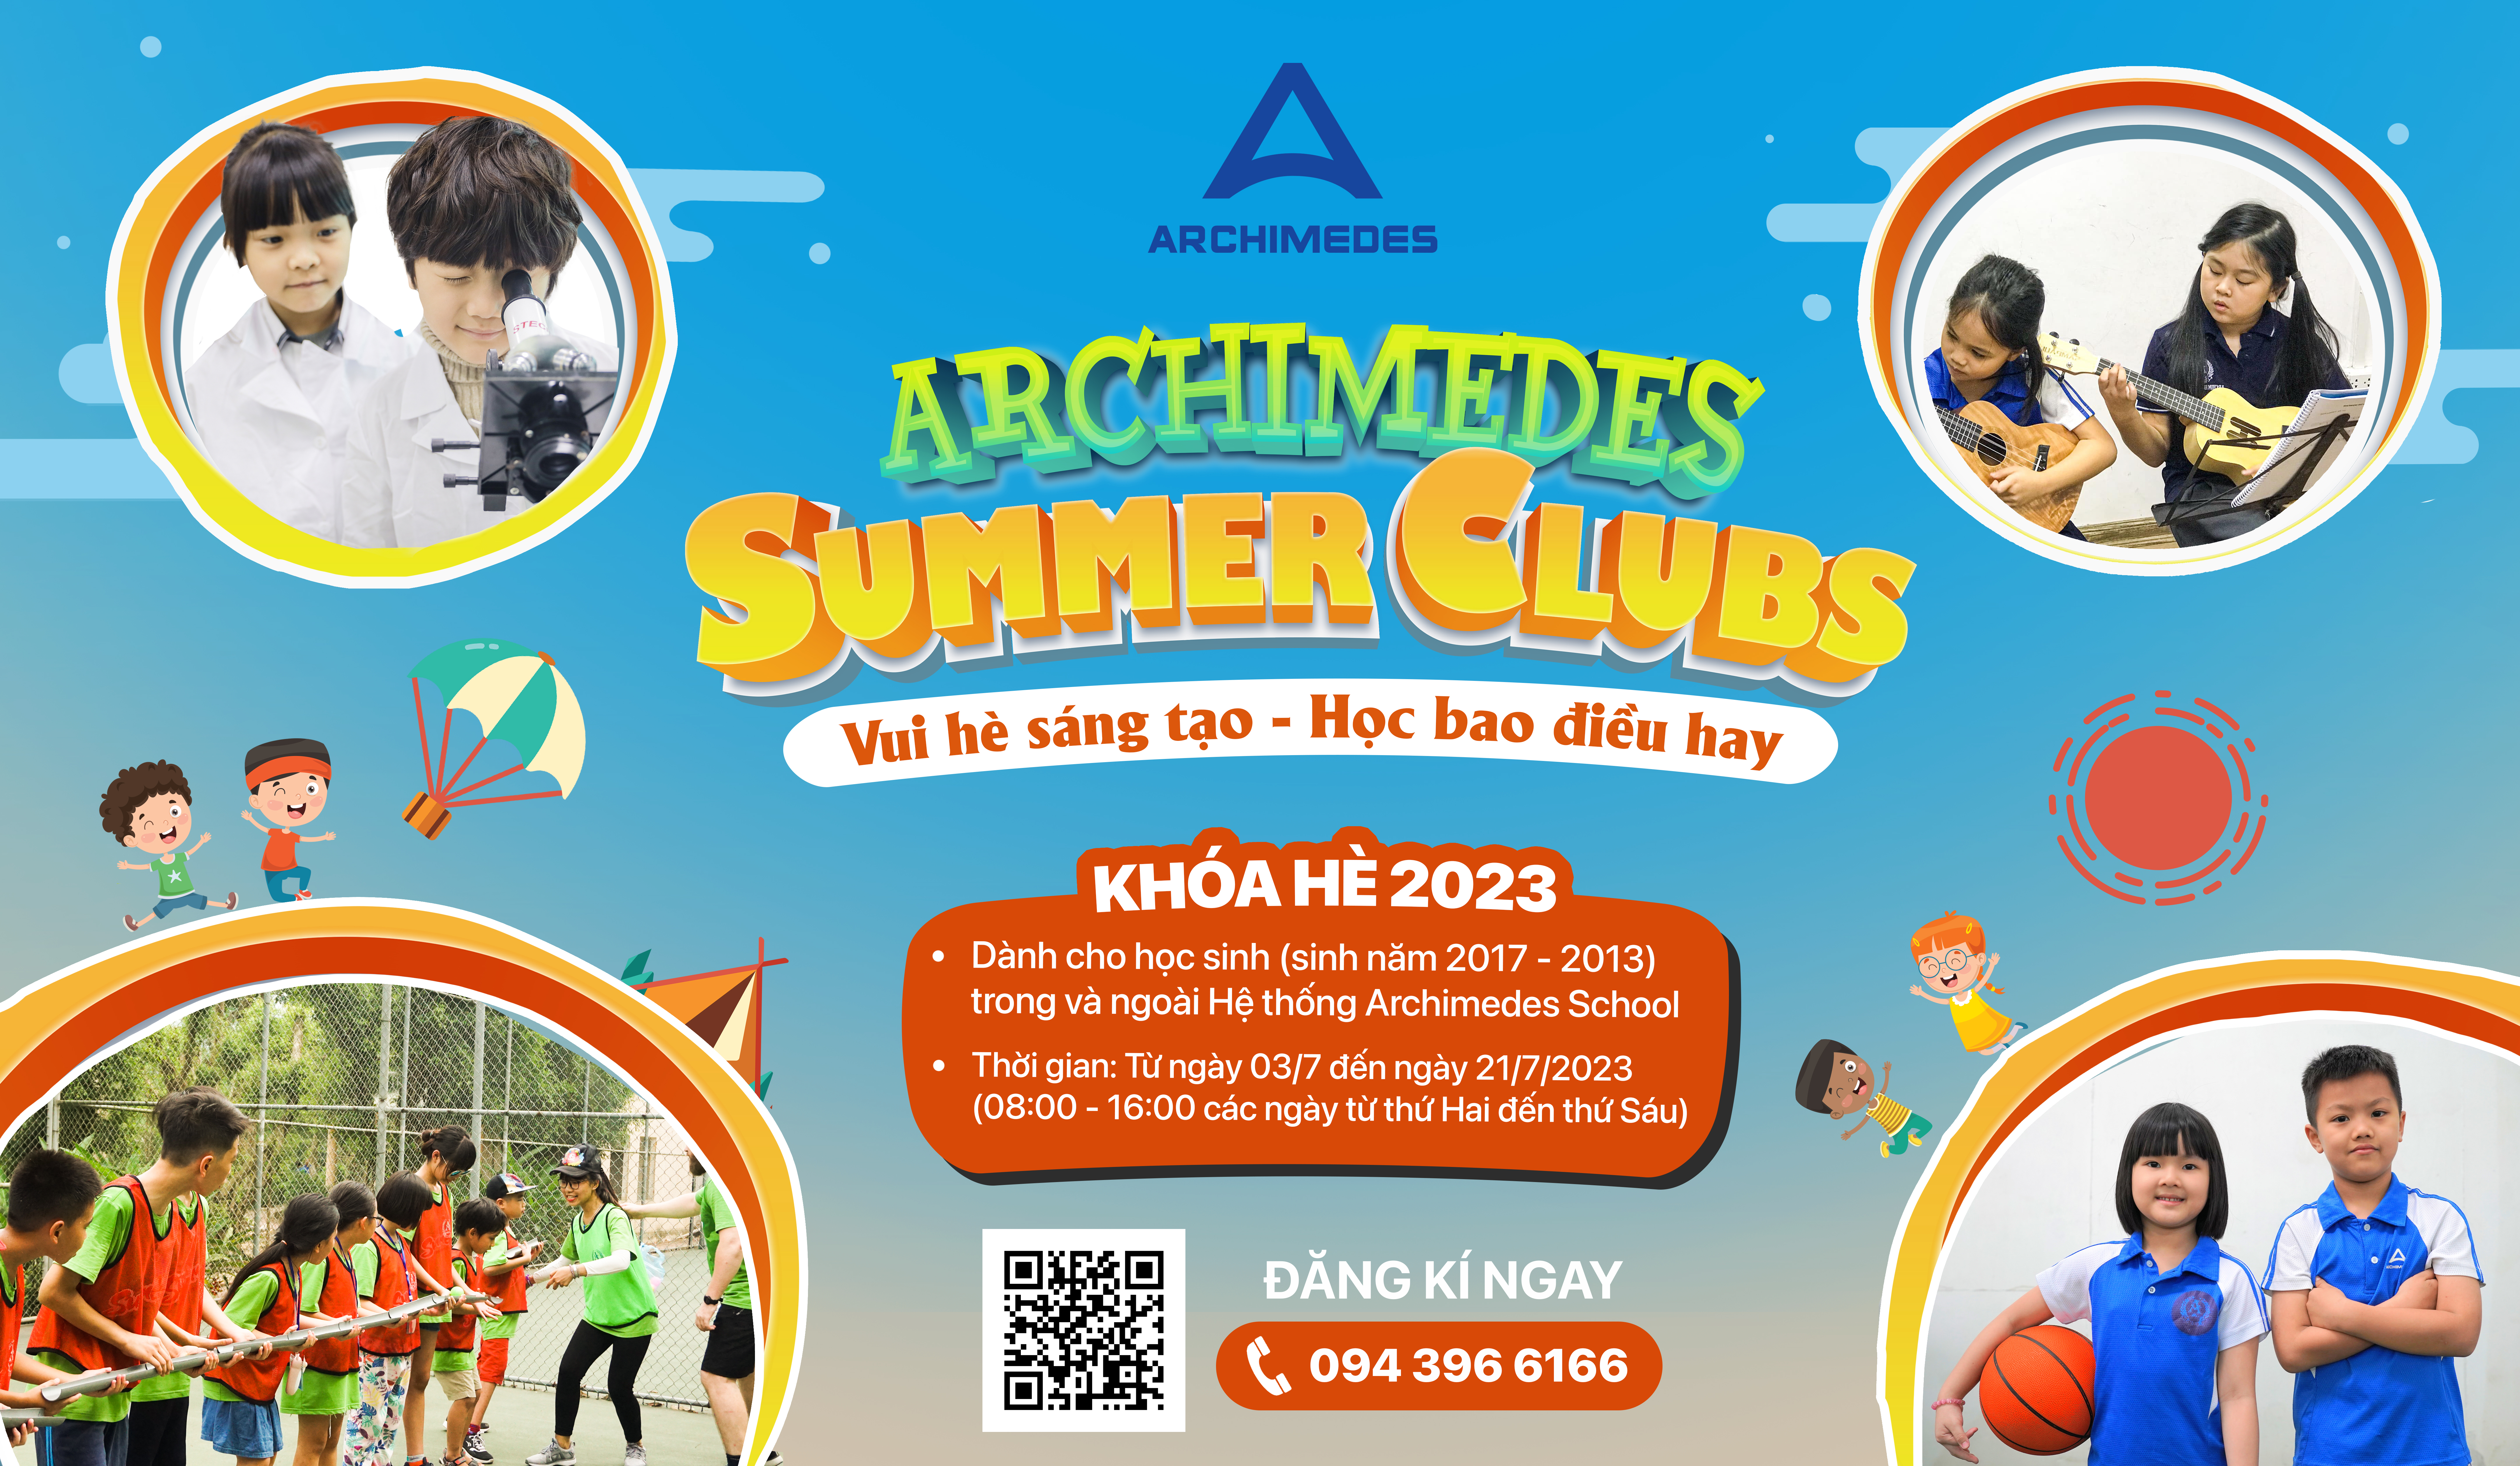 [AAPS] Hè vui, bay cao sáng tạo cùng Archimedes Summer Clubs 2023